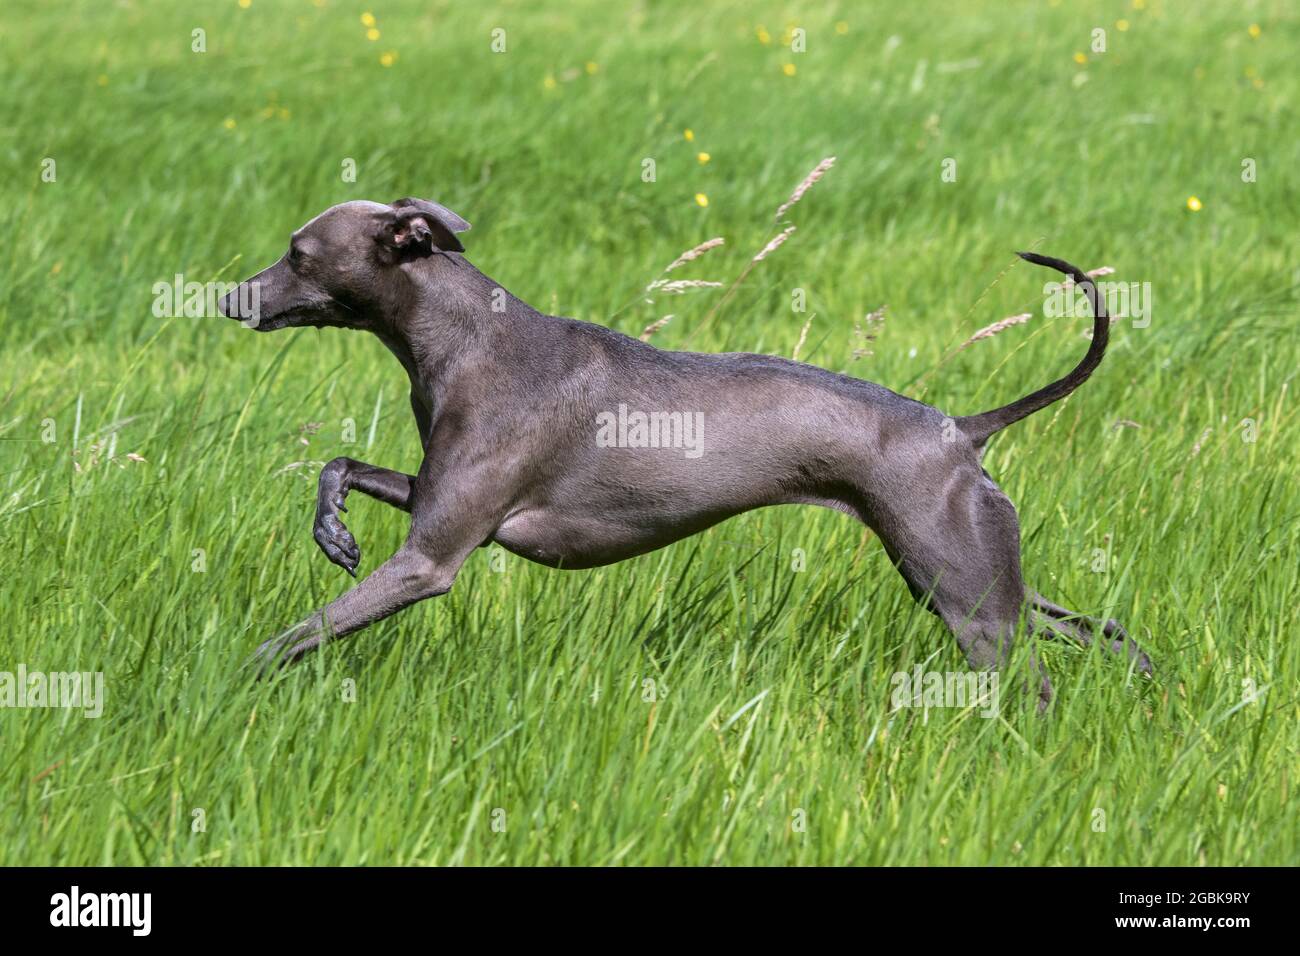 Italian Greyhound / Piccolo levriero Italiano / Italian Sighthound, smallest dog breed of the sighthounds running in field Stock Photo